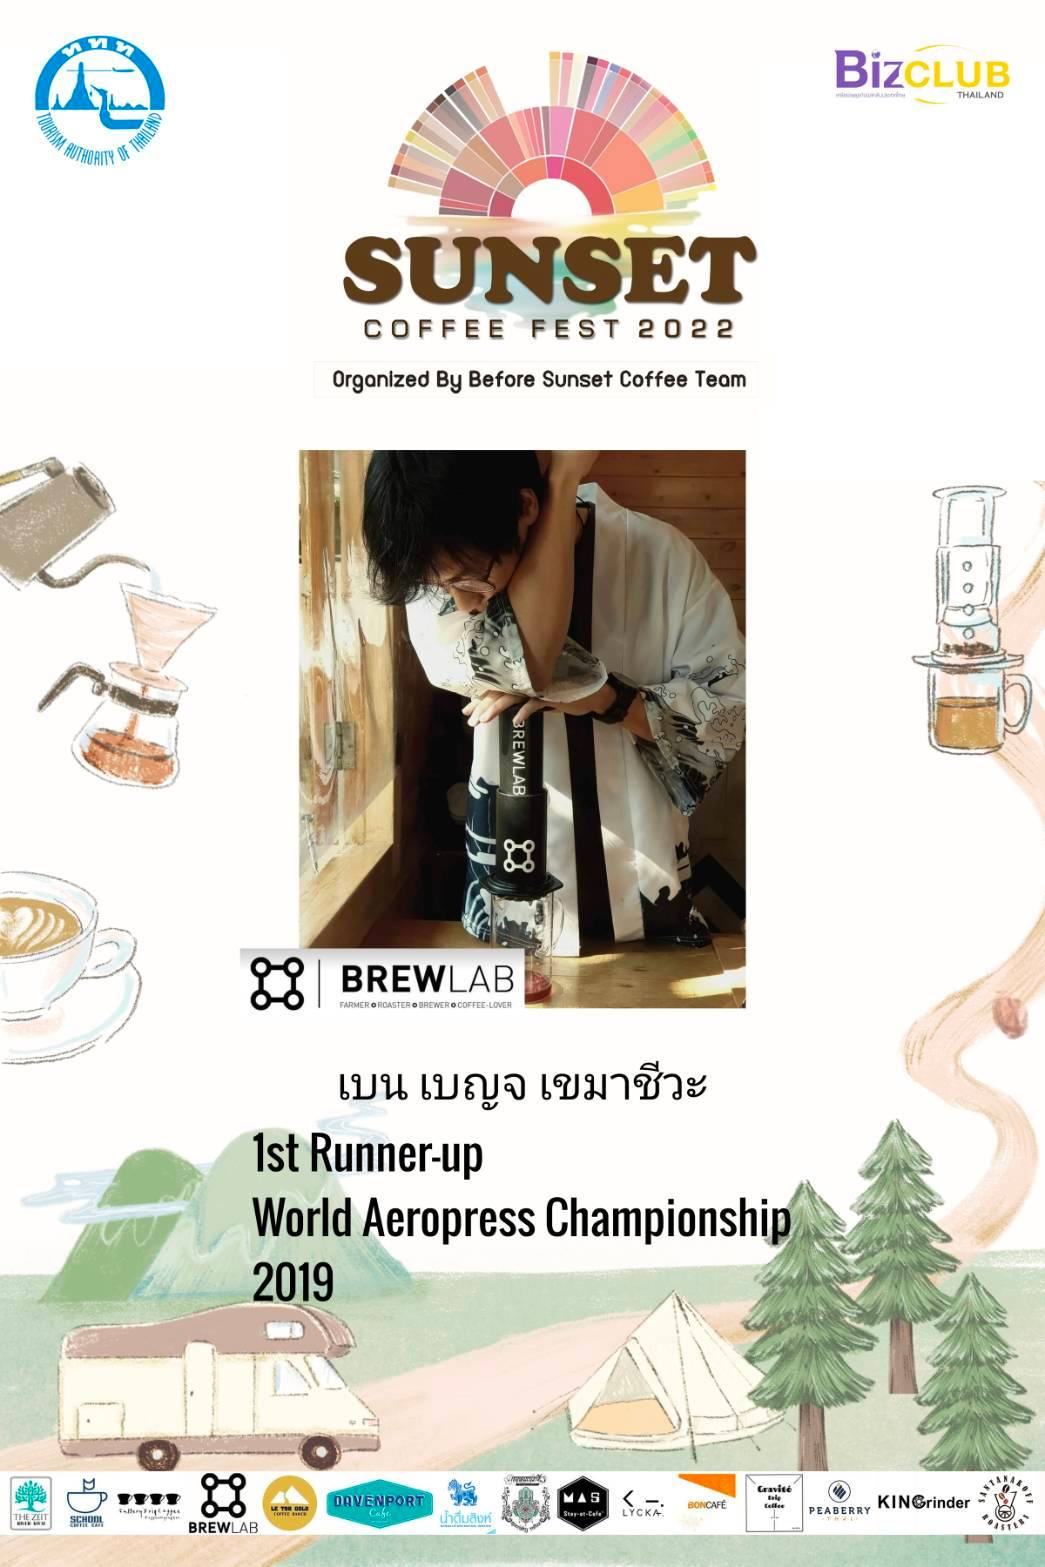 Sunset Coffee Fest 2022 เทศกาล Specialty Coffee ของกลุ่มจังหวัดภาคตะวันตกและใกล้เคียง